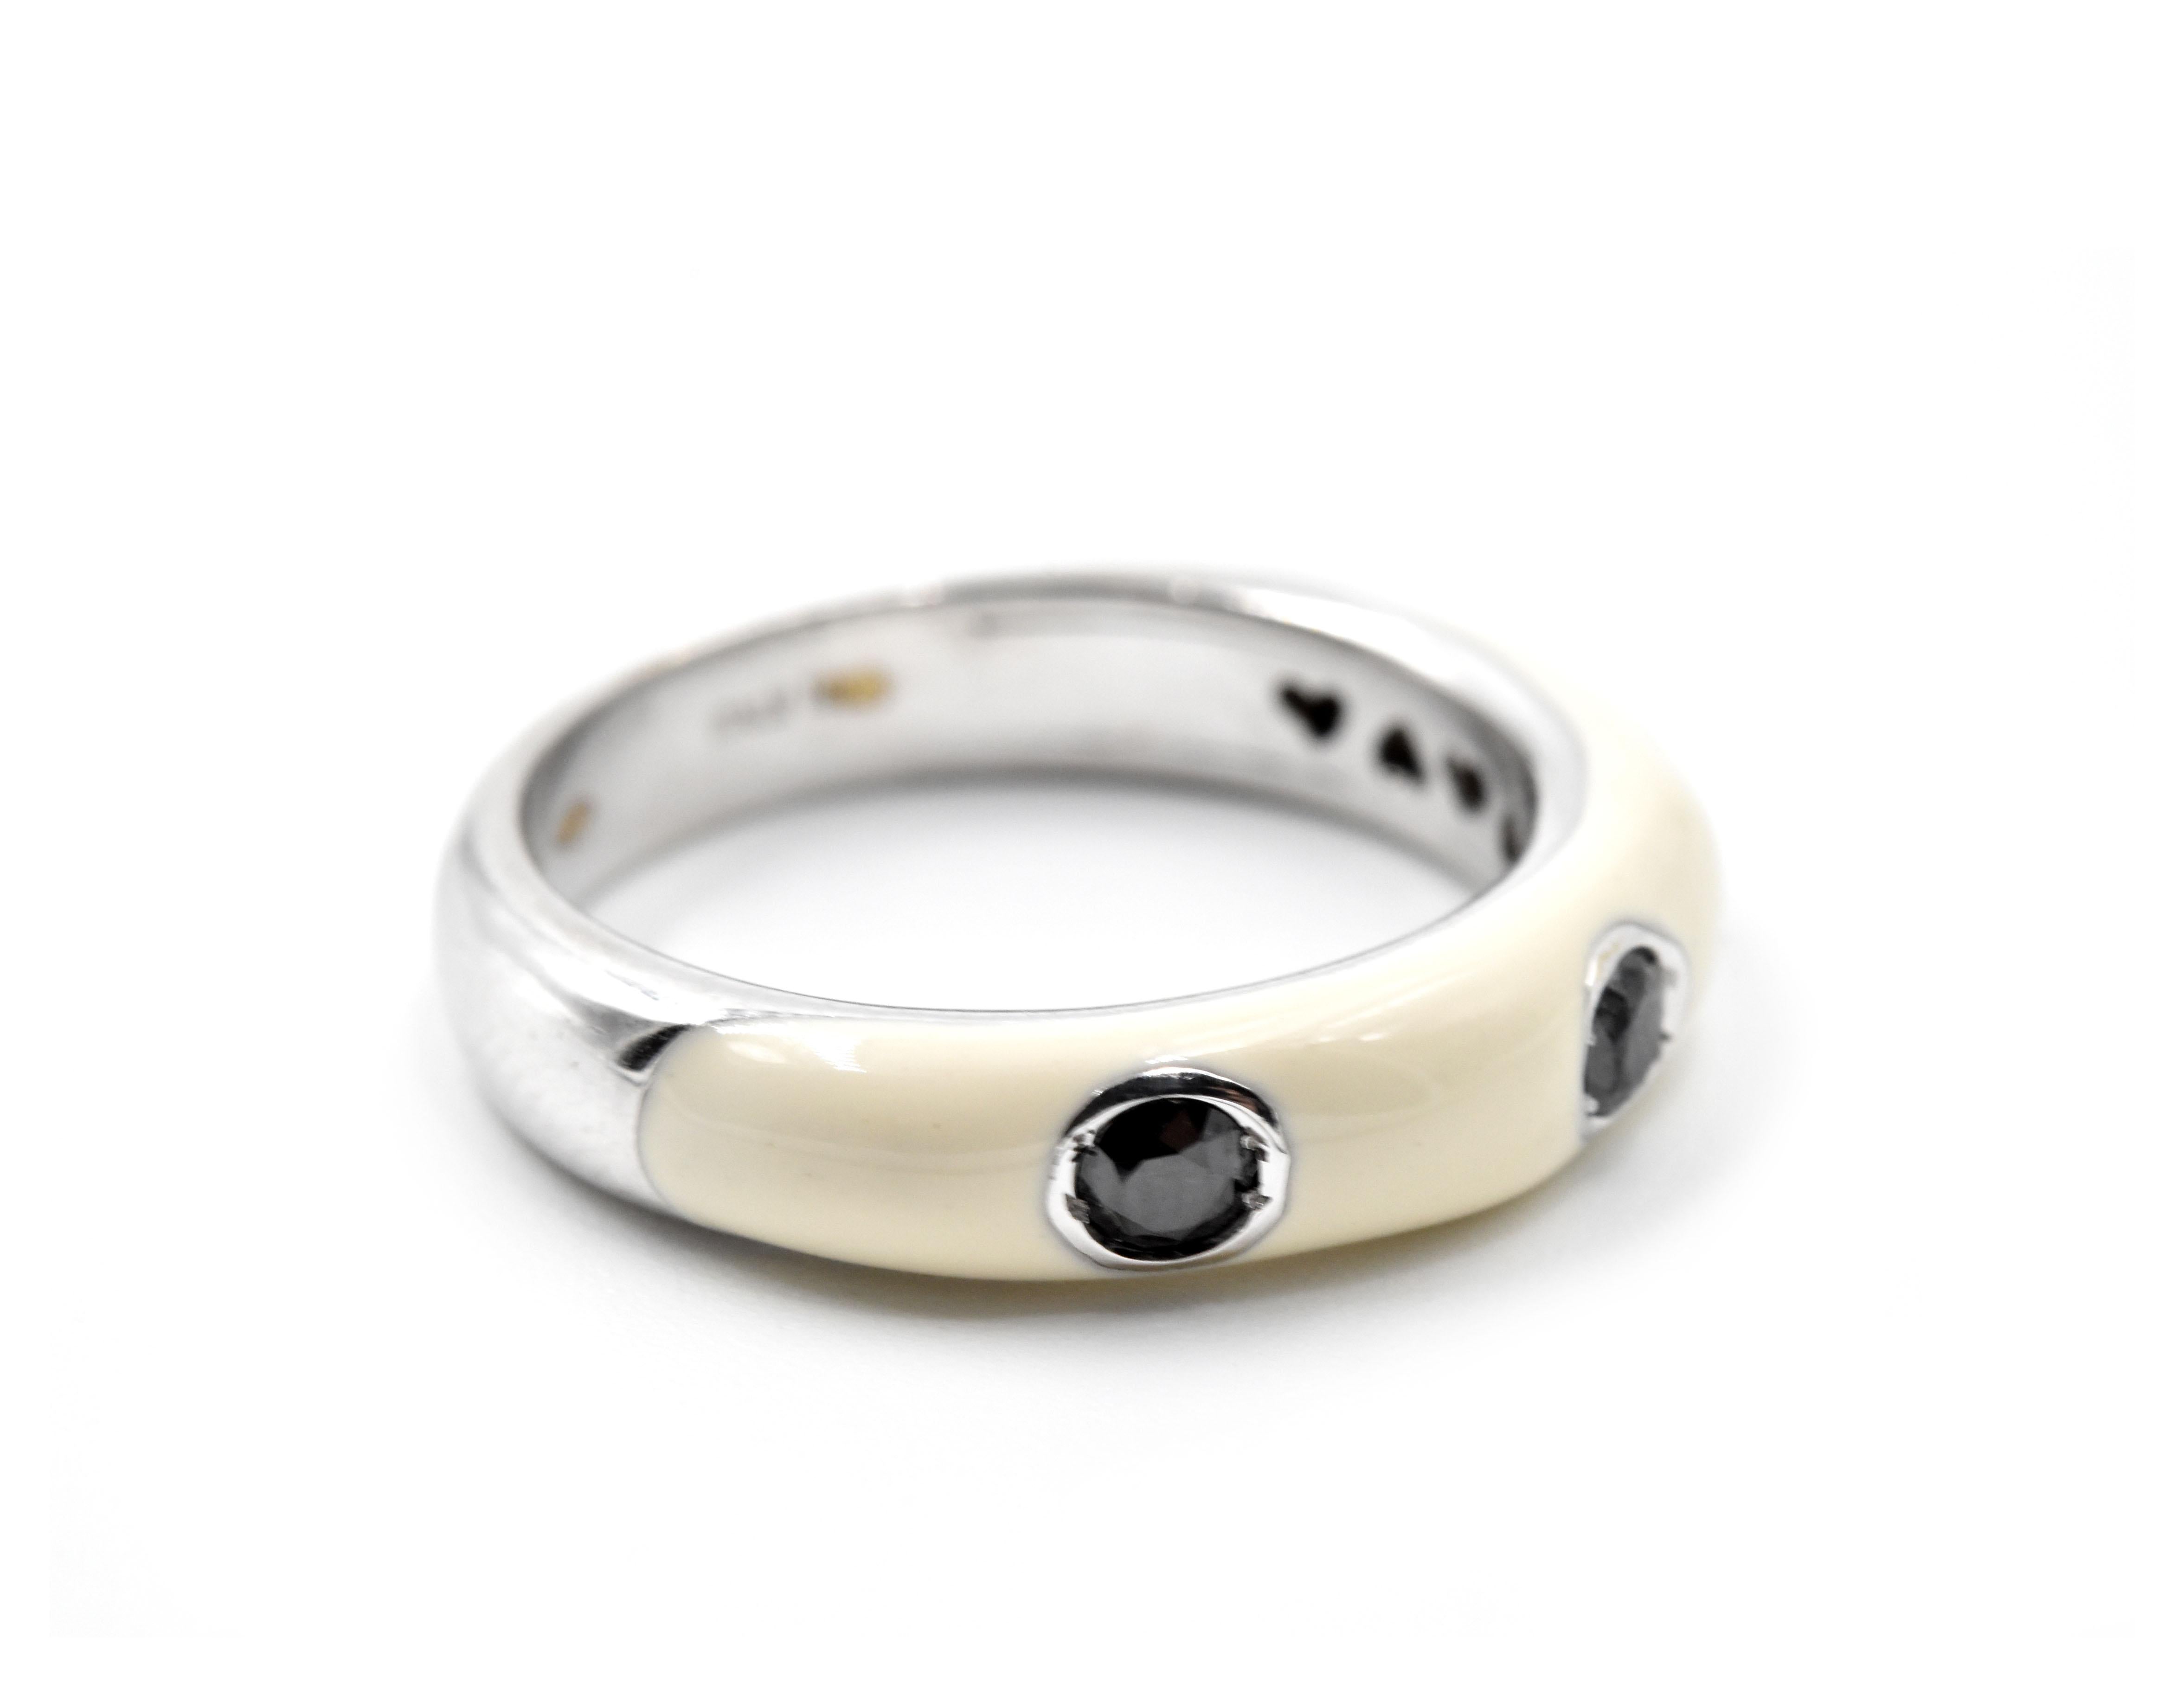 Designer: custom design
Material: 18k white gold
Black Diamonds: three round brilliant cuts = 0.28 carat total weight 
Ring Size: 7
Weight: 5.49 grams
